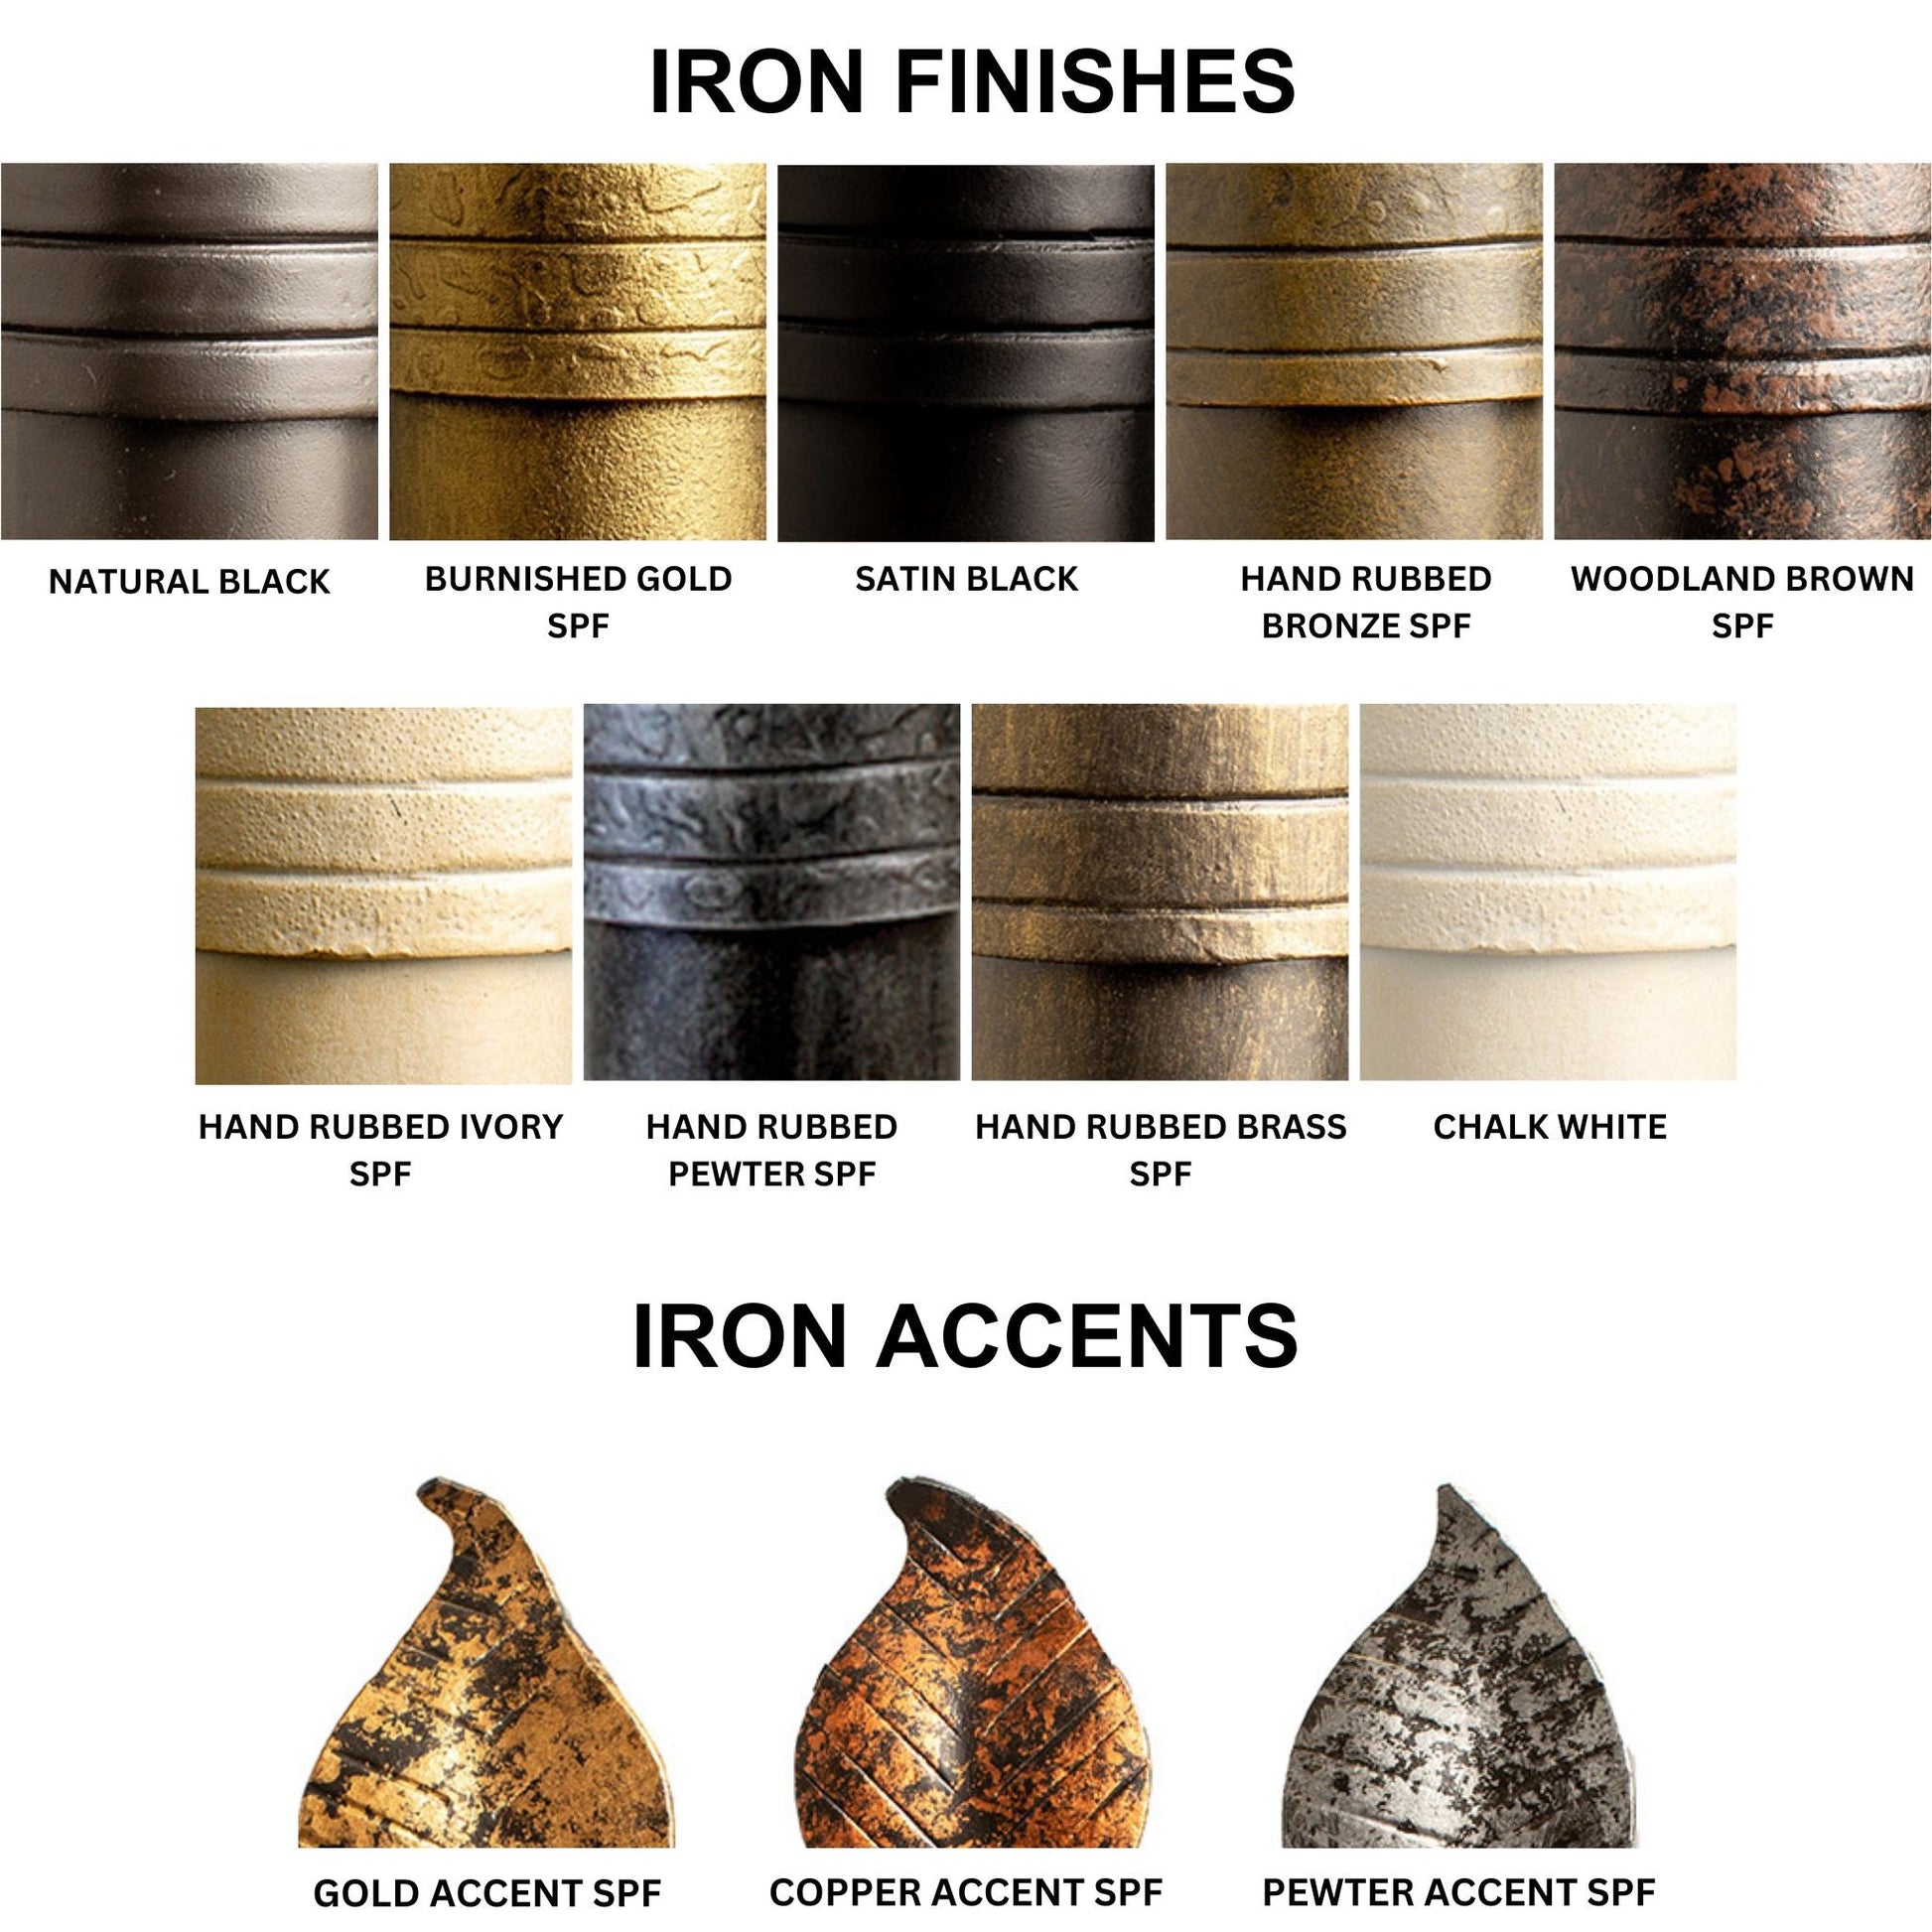 Stone County Ironworks Sassafras 16" Natural Black Iron Towel Bar